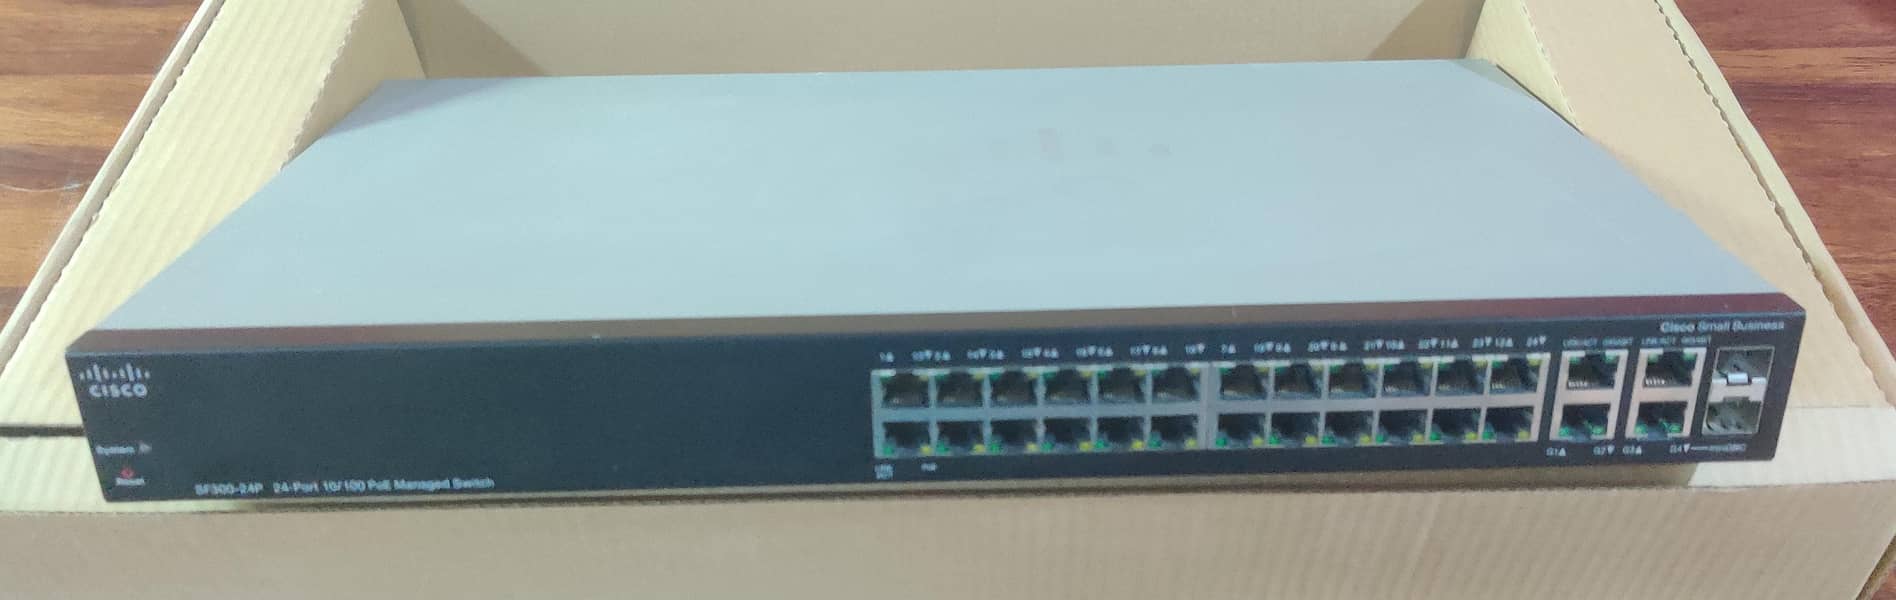 Cisco SF-300- 24P 24-port 10/100 PoE Managed Gigabit Switch (Open Box) 3